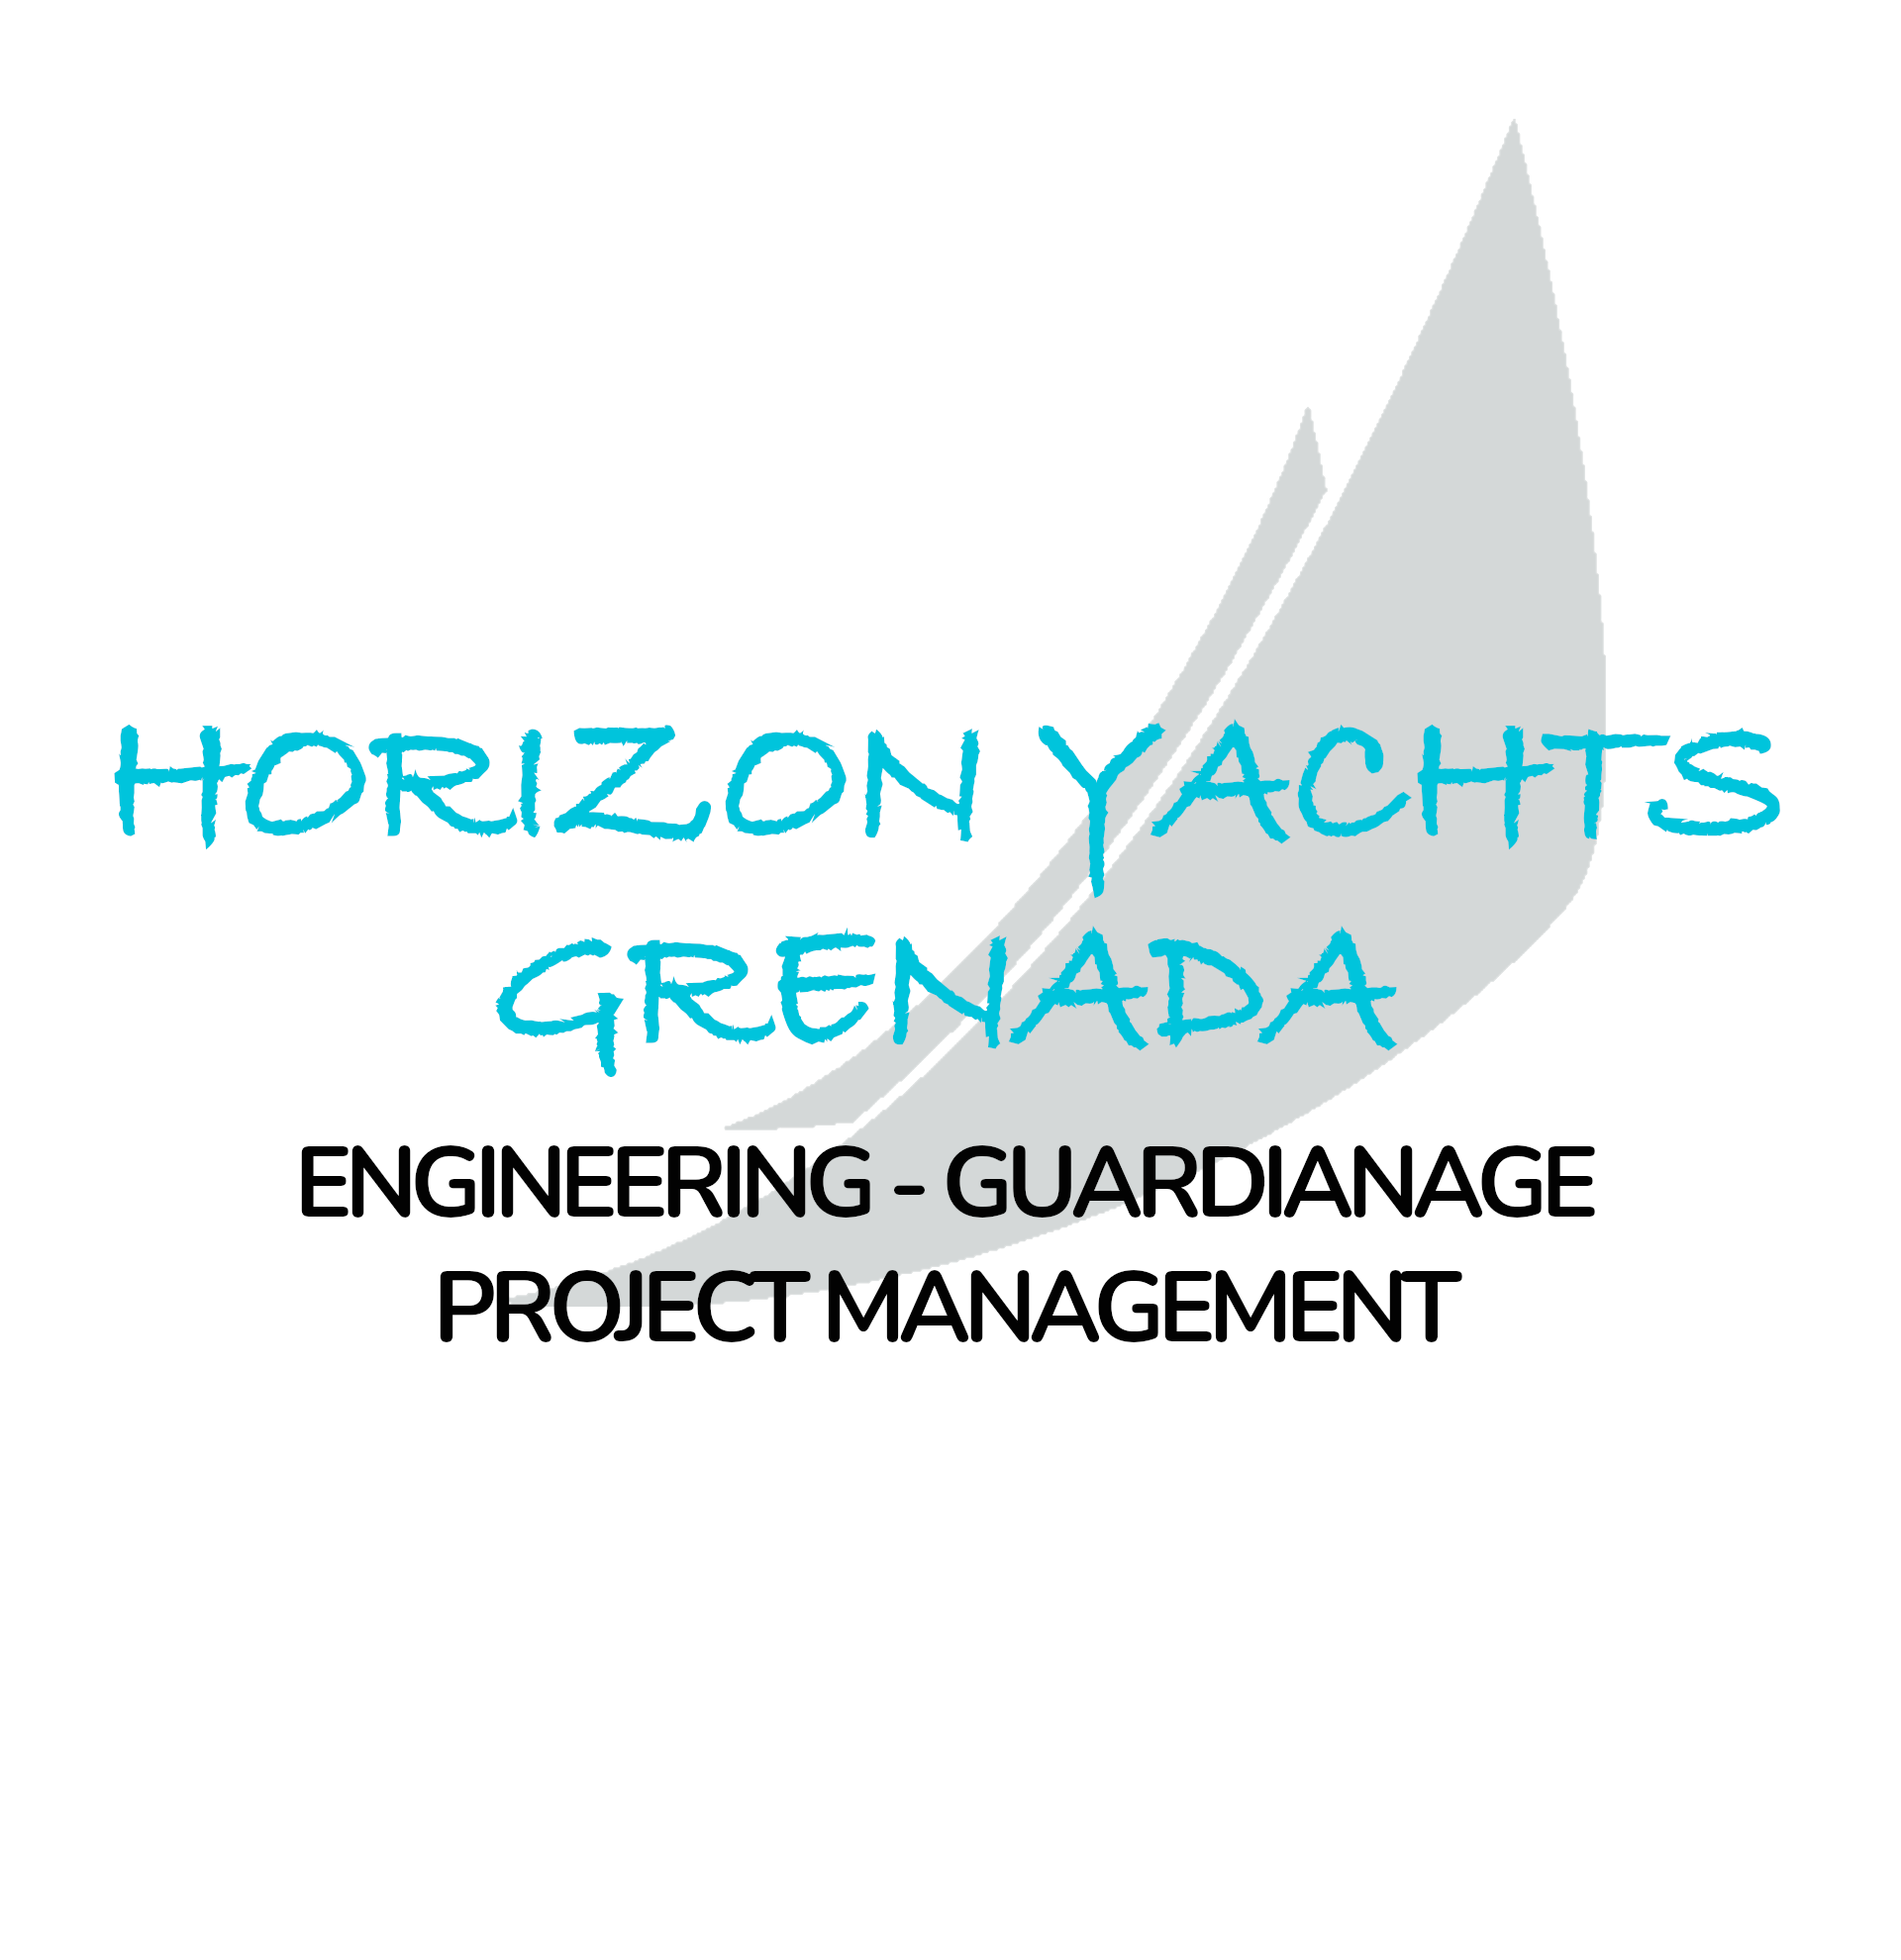 Horizon Yachts Grenada logo